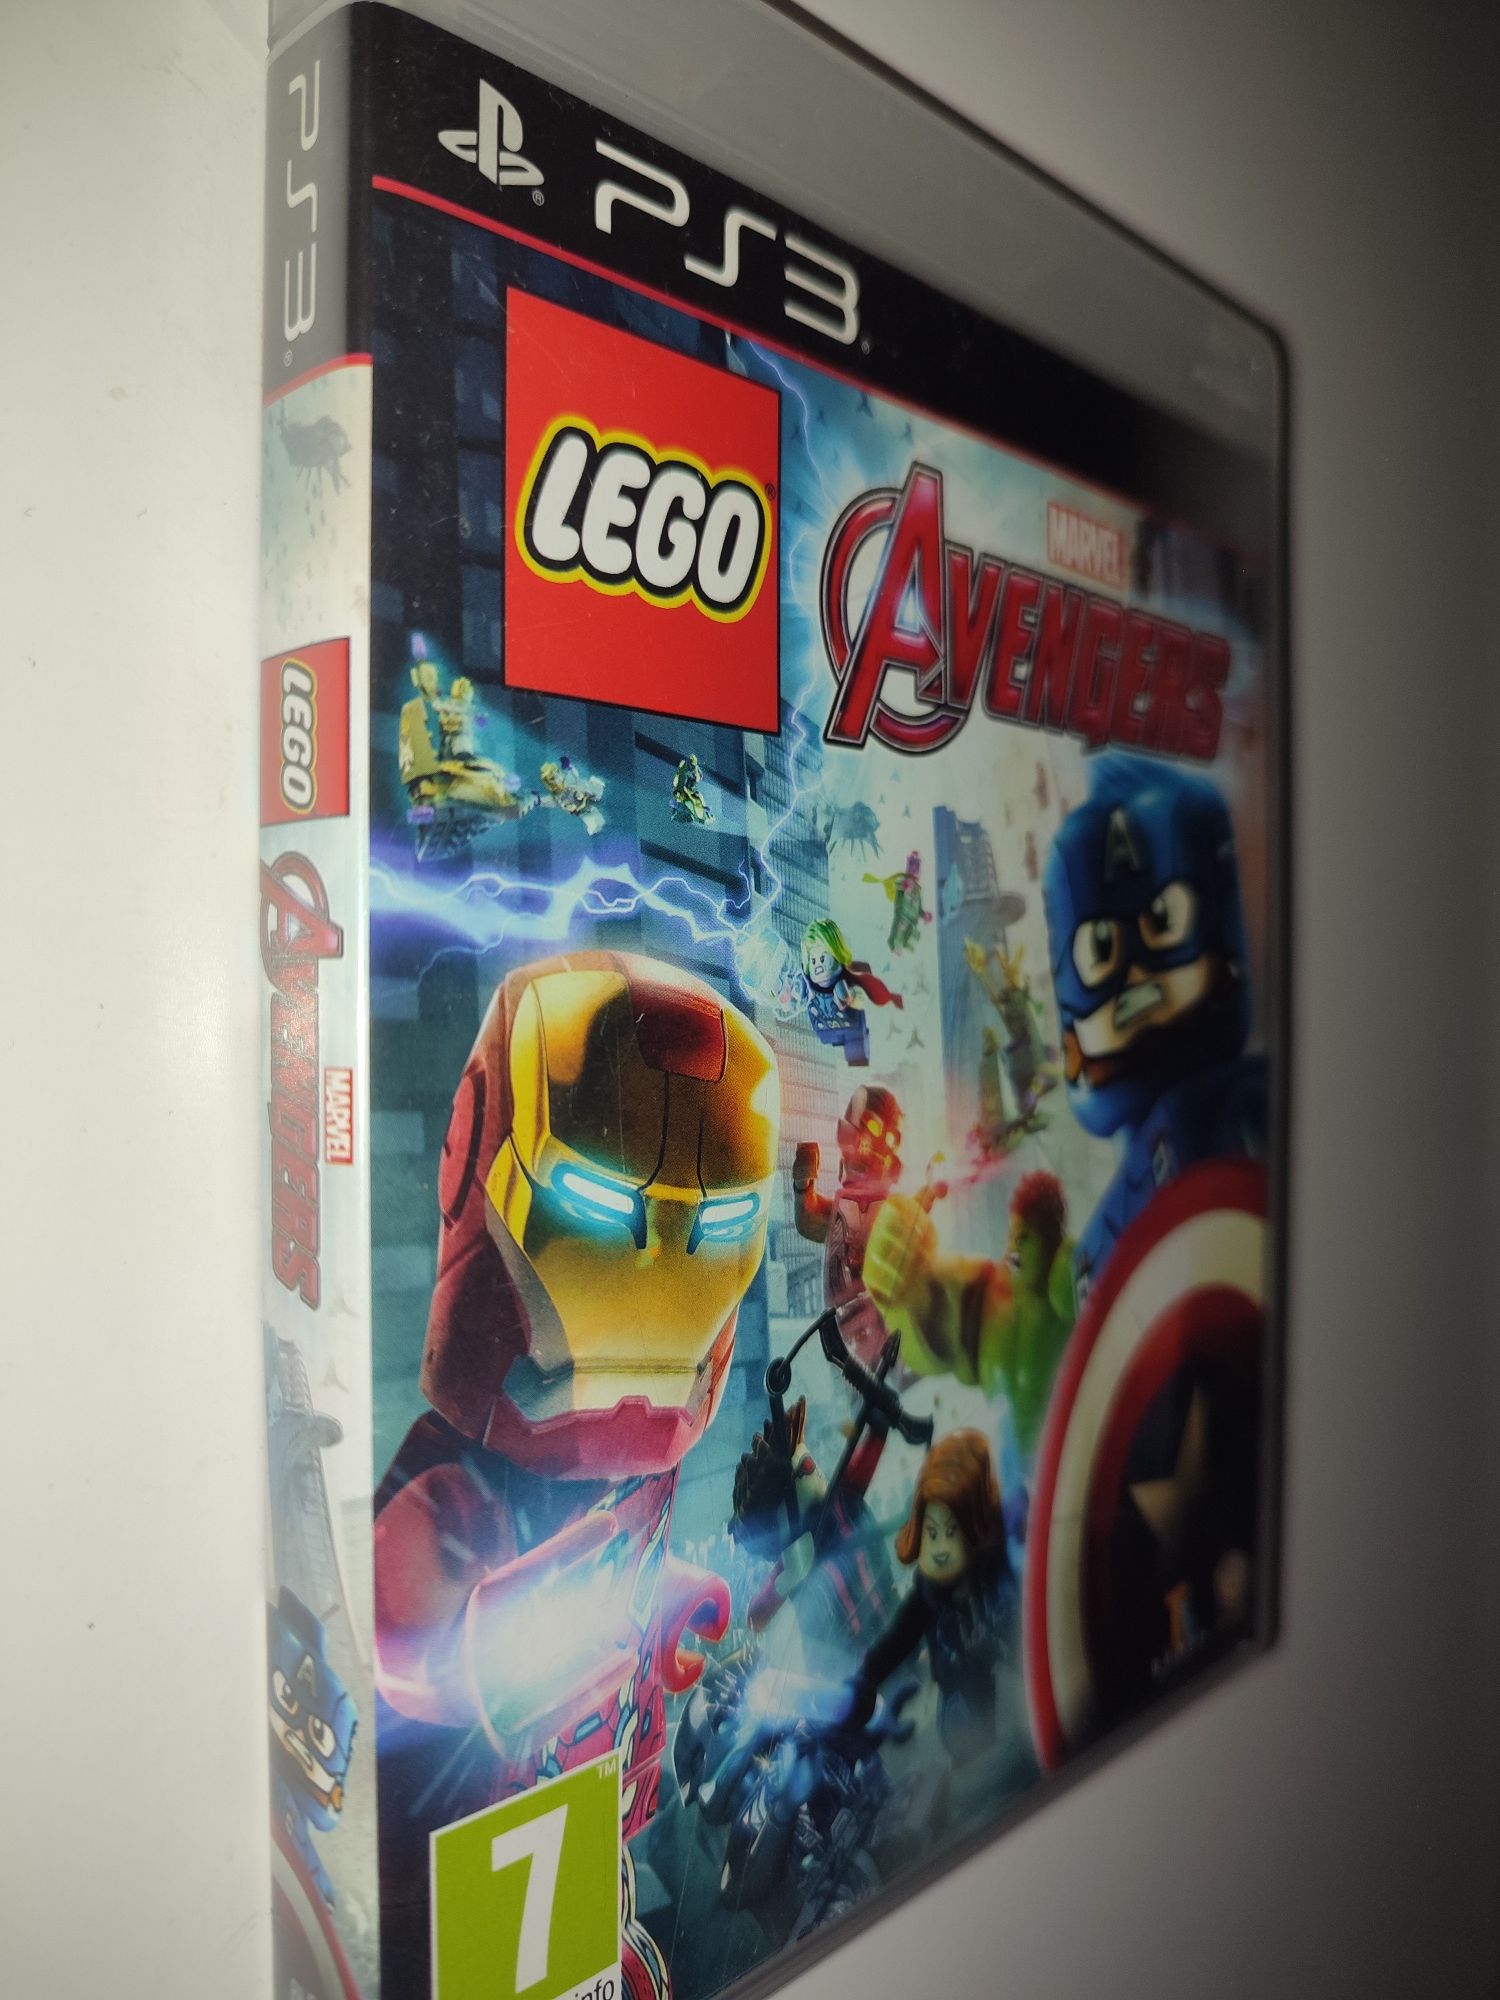 Gra Ps3 Lego Avengers PL gry PlayStation 3 Minecraft Farming Sonic